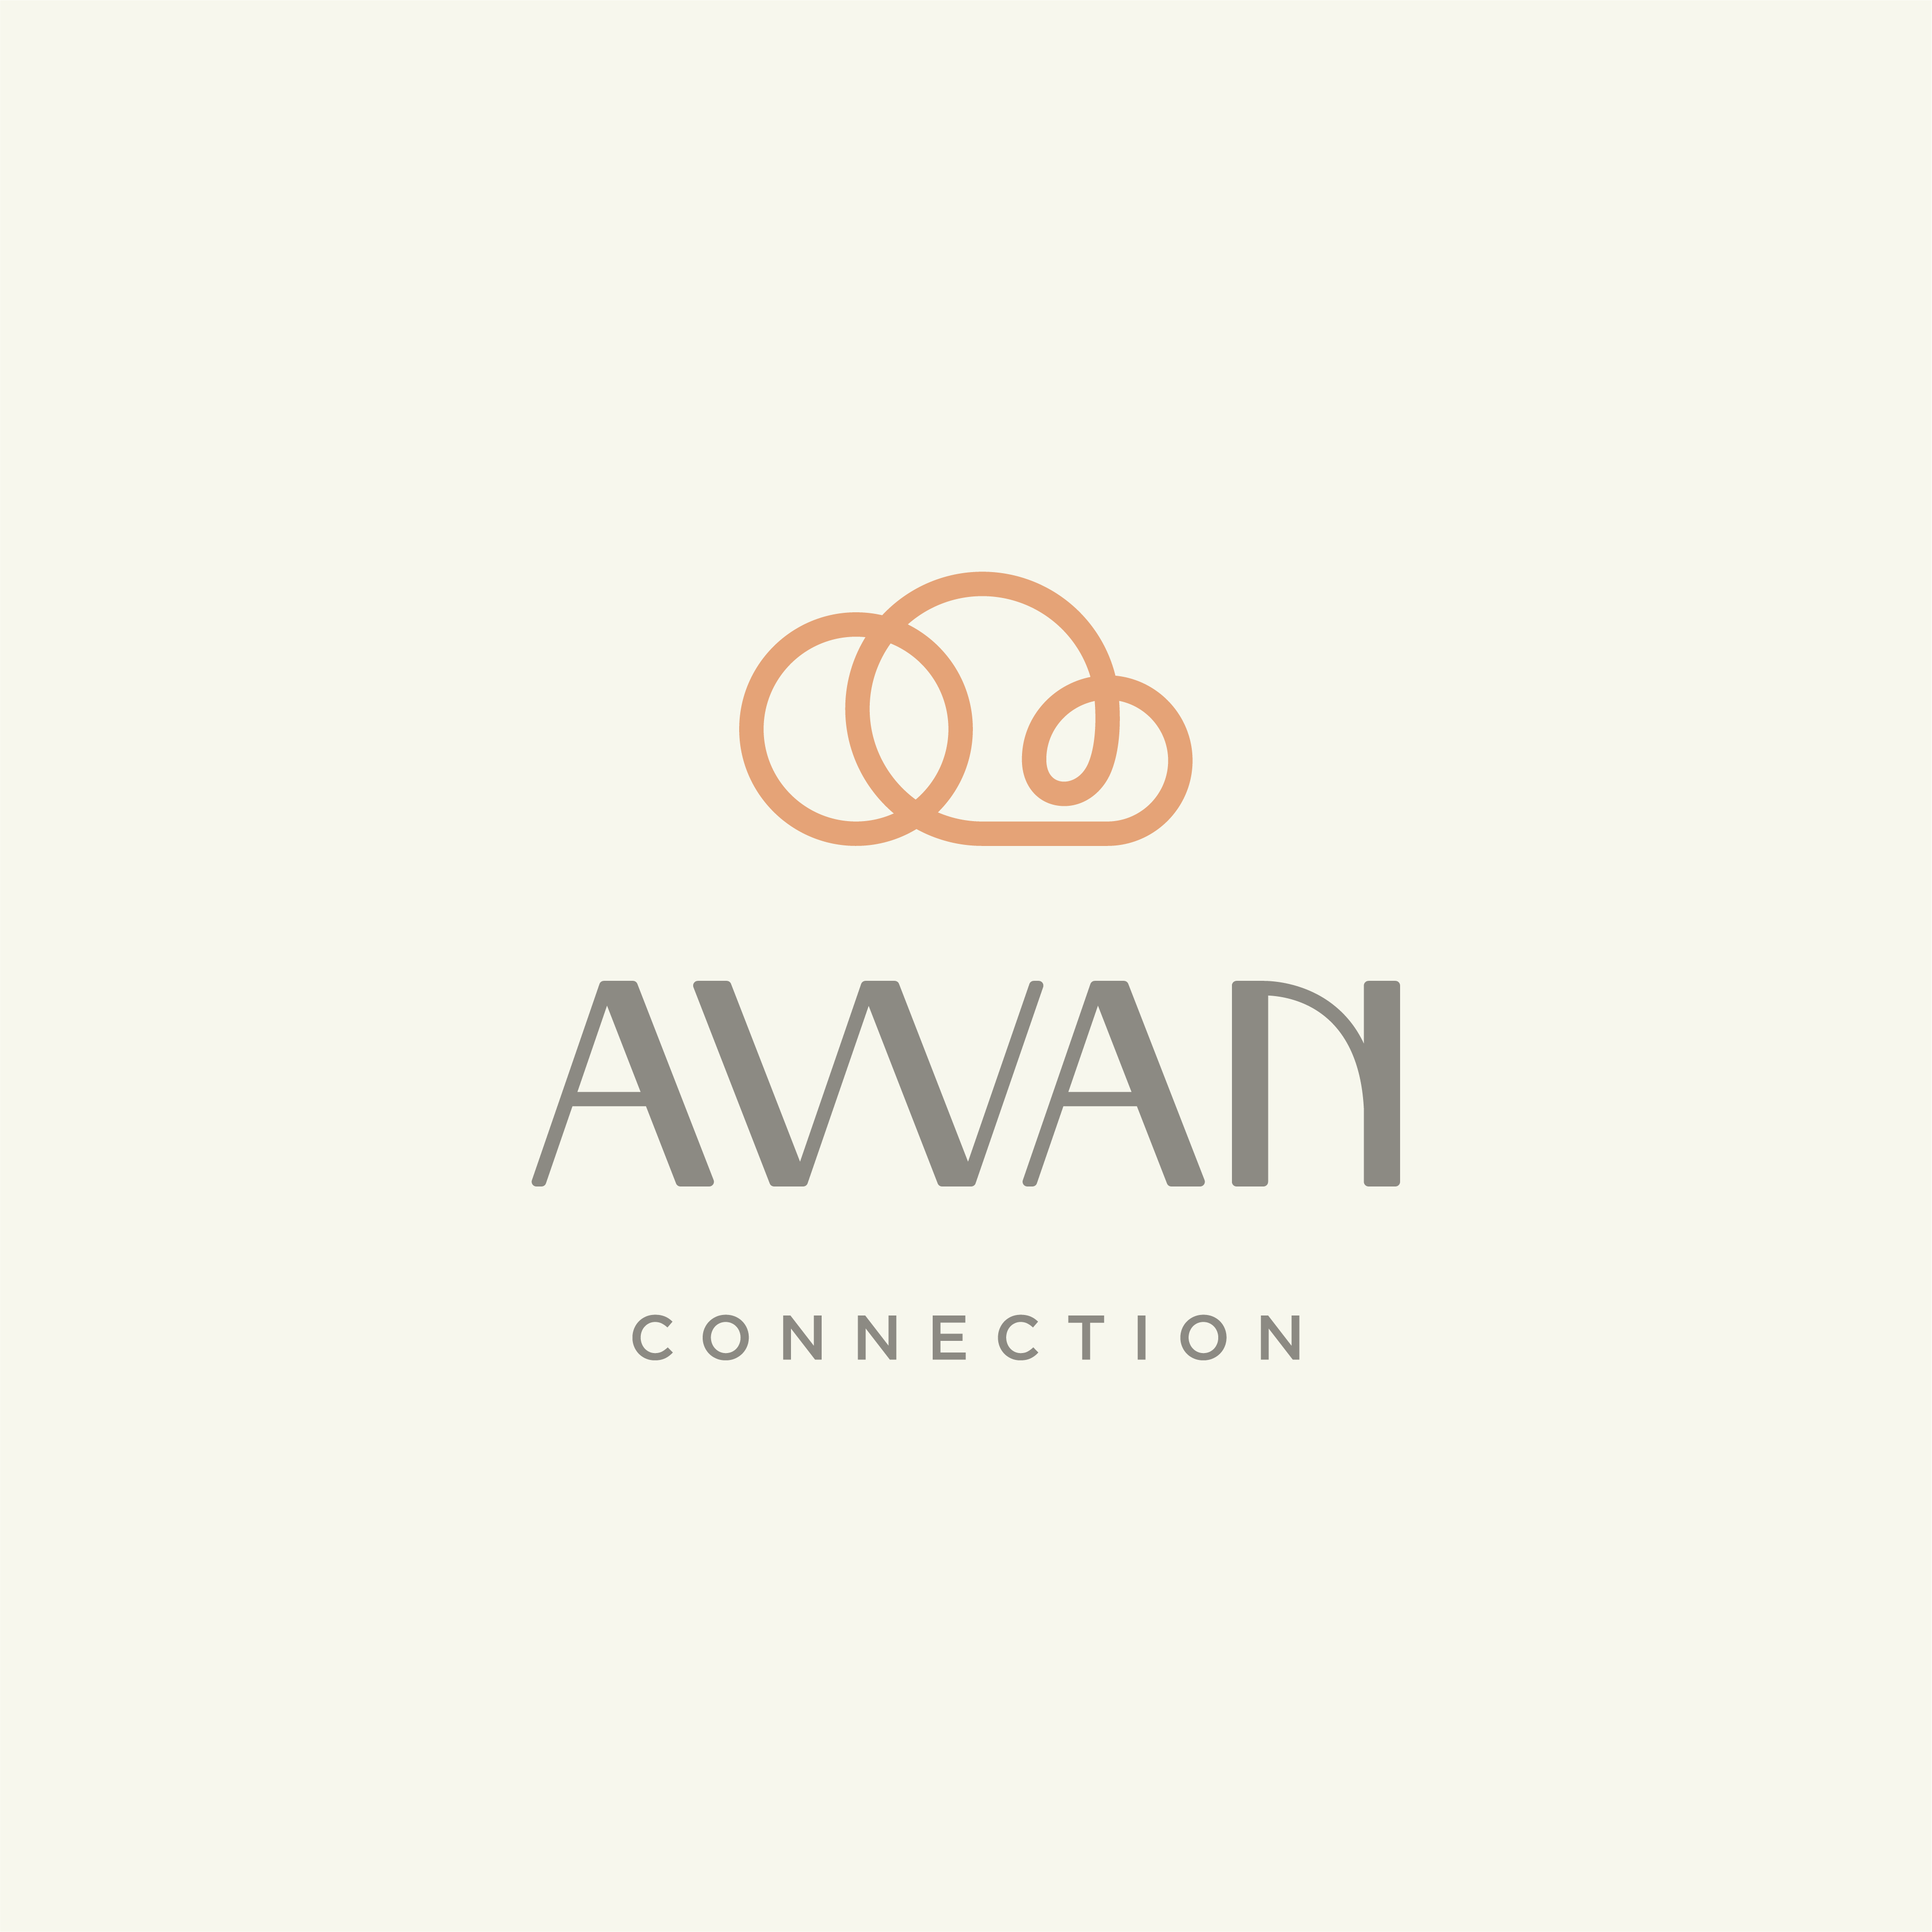 Awan Connection 